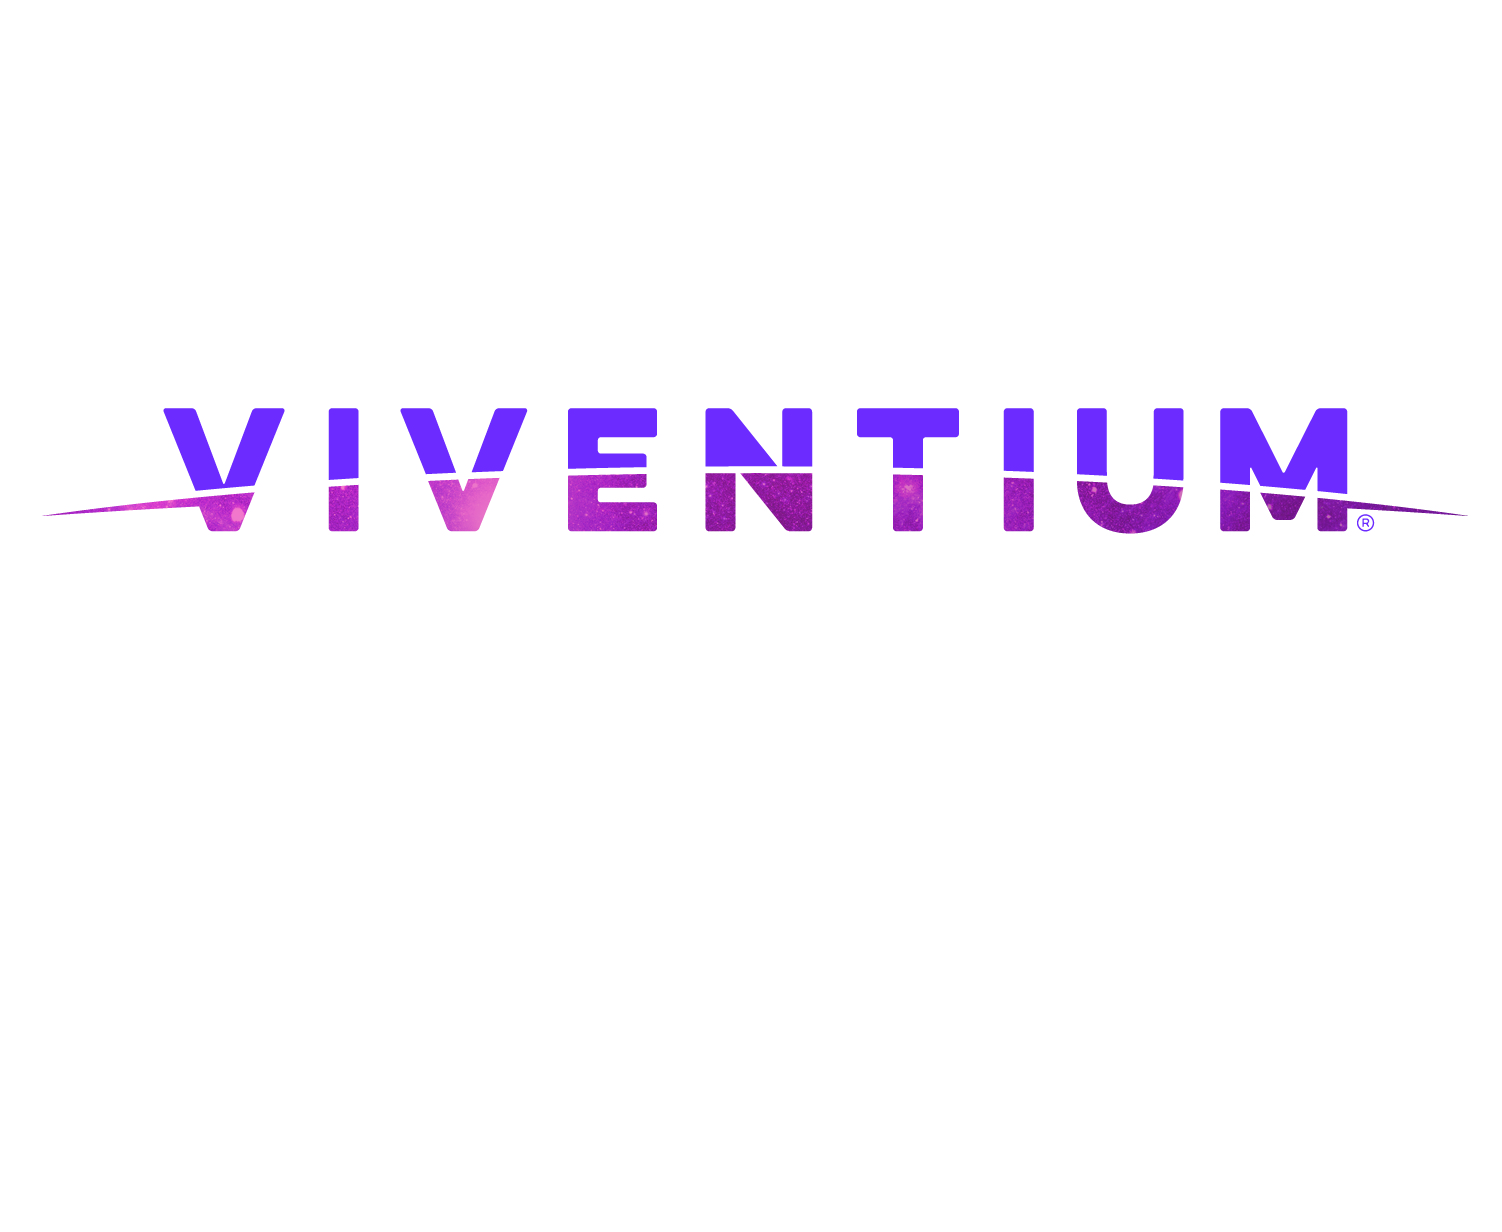 Viventium Brings Hap